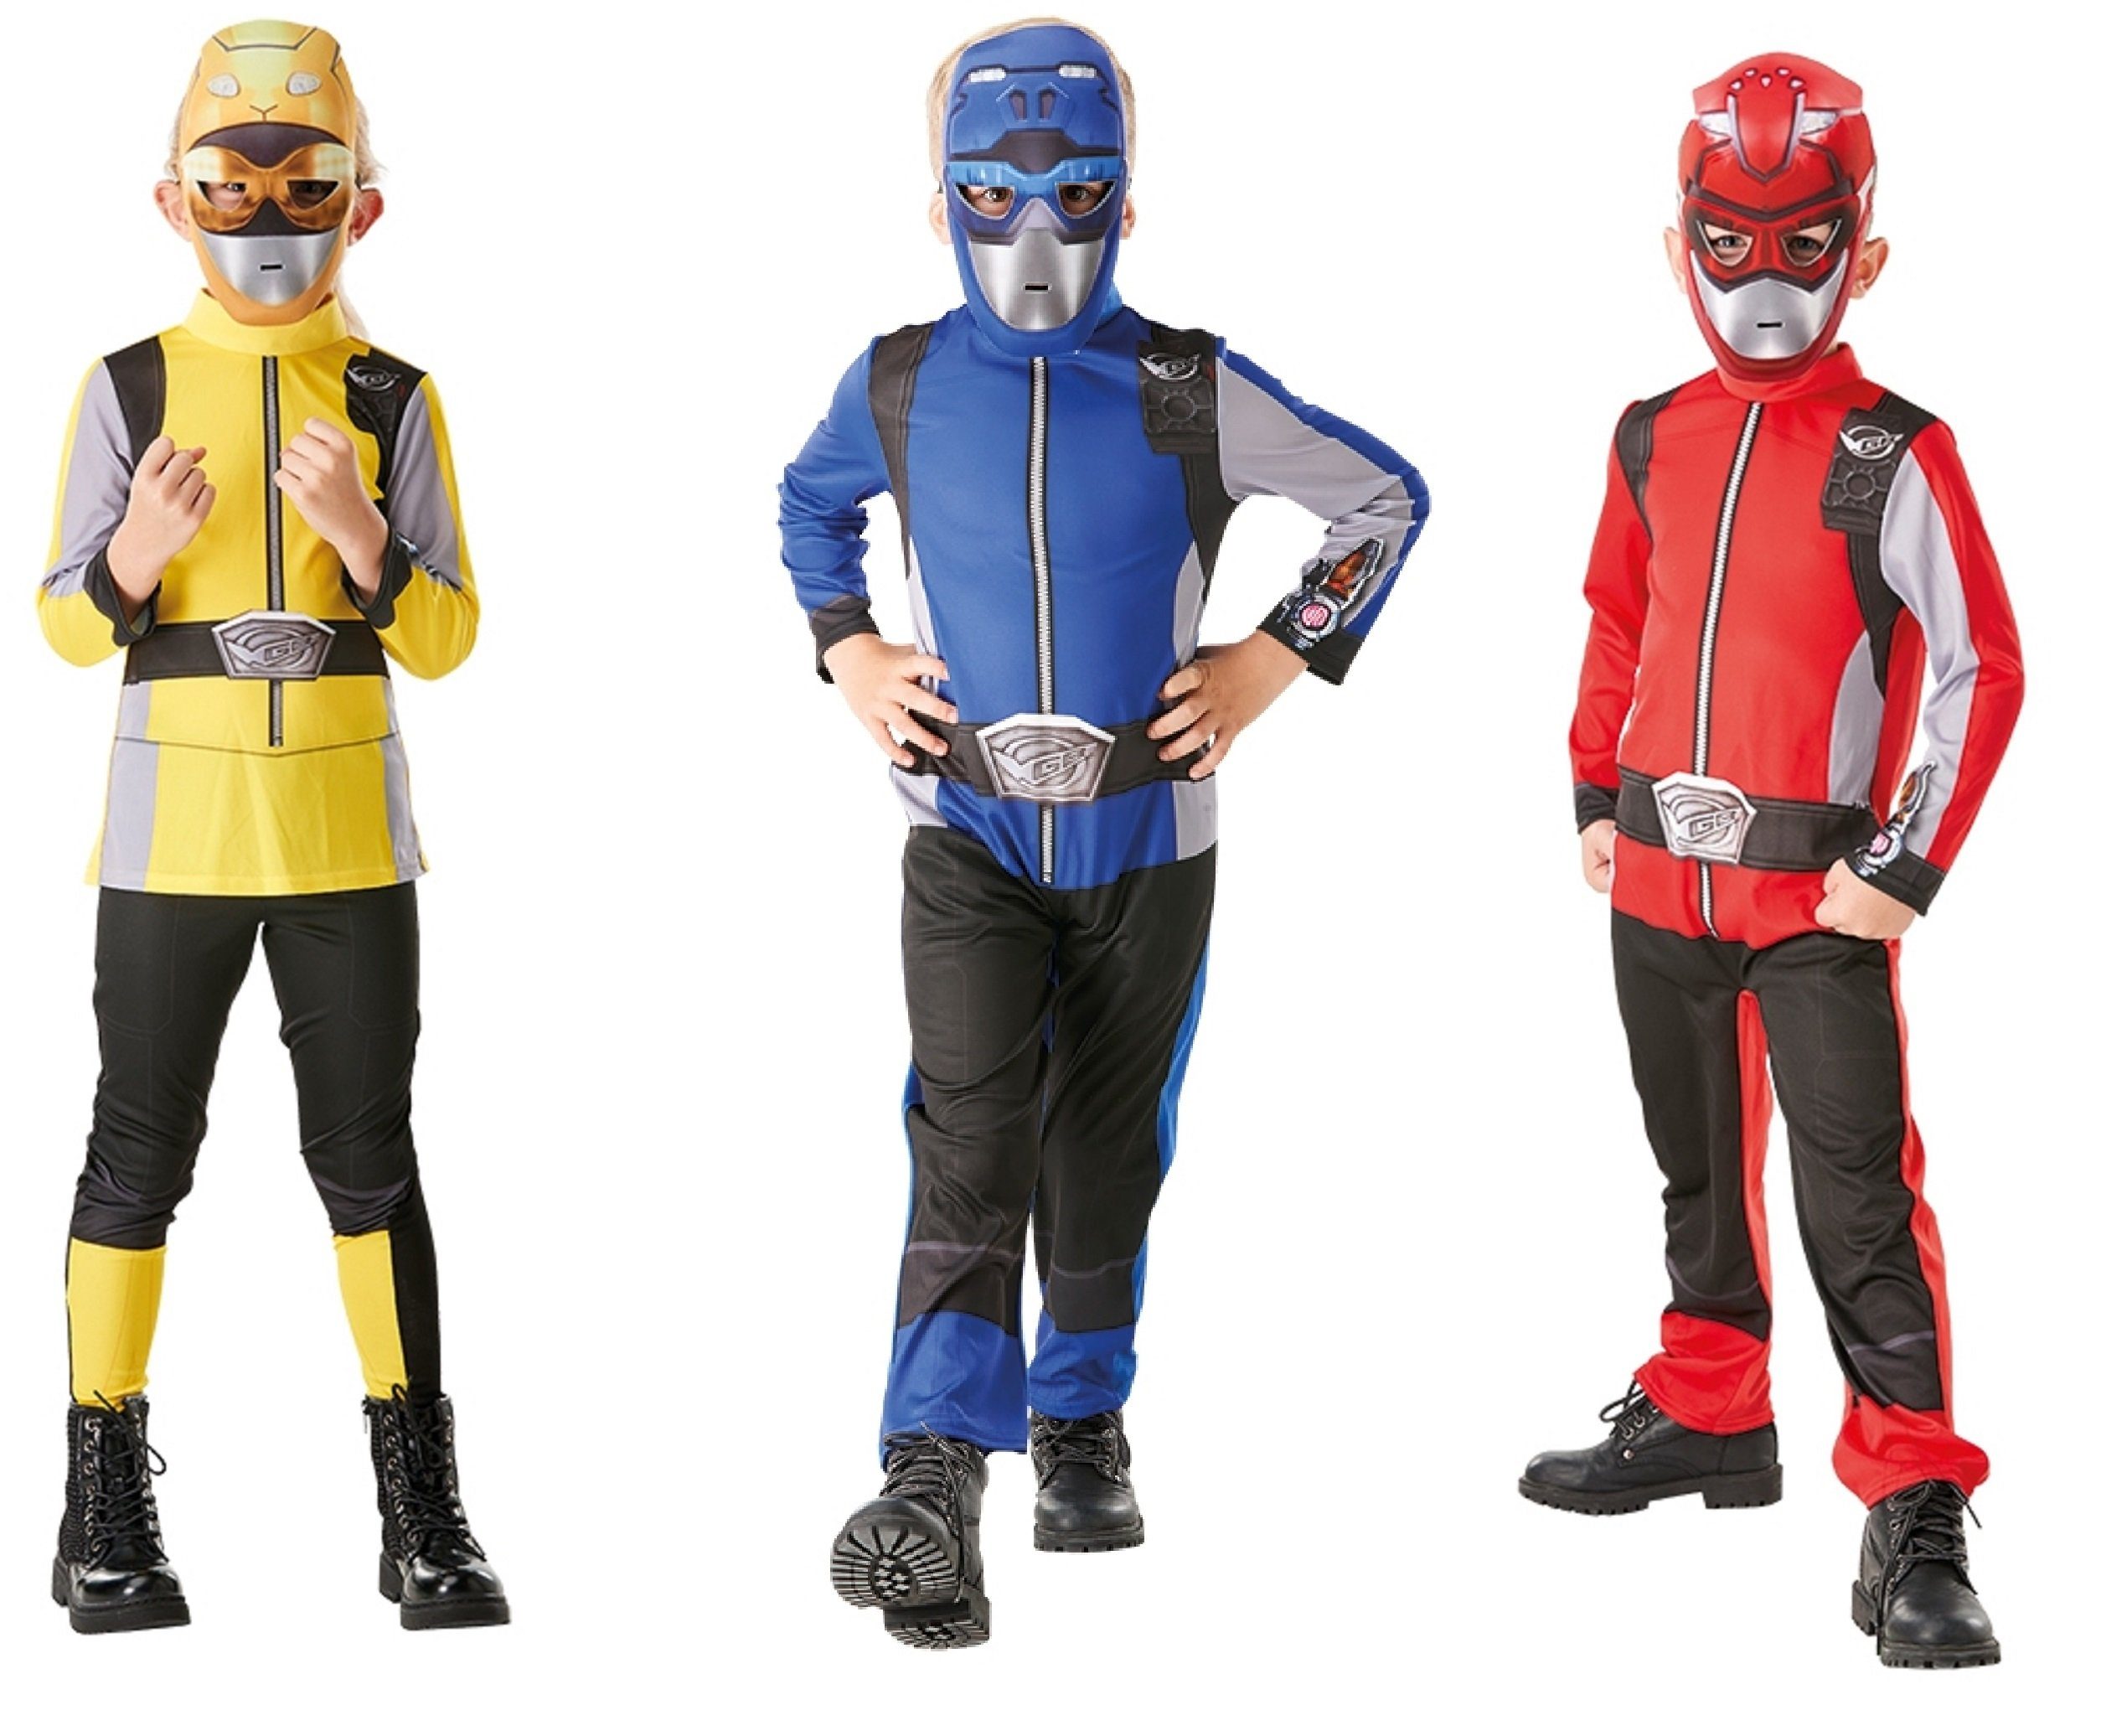 POWER RANGERS Kostüm, Rubies 3300458 - Red Power Ranger Beast Morpher  Deluxe online kaufen | OTTO